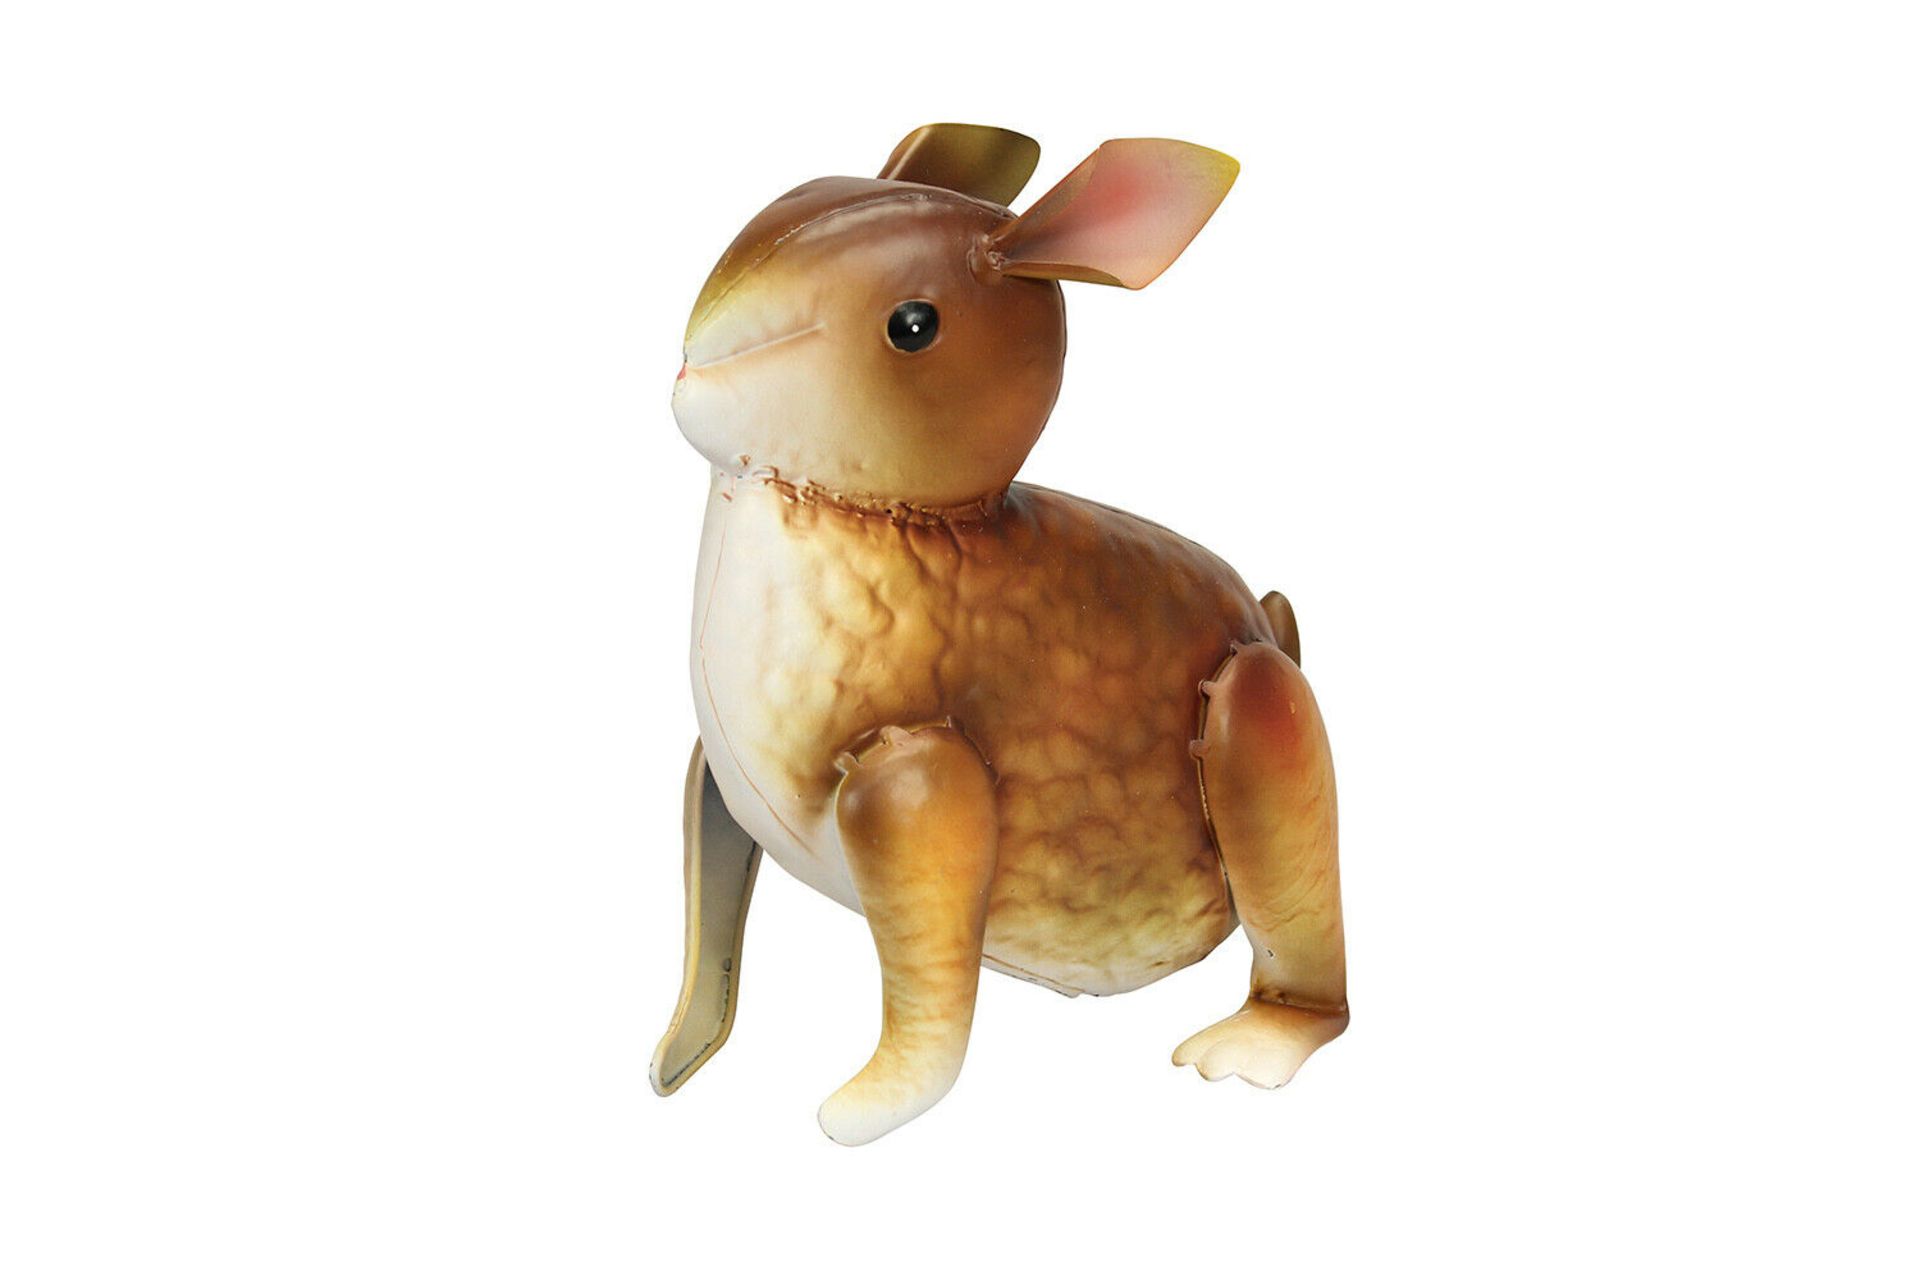 Primus Brown Metal Bunny / Baby Rabbit Garden Ornament - Box of 4 Total RRP £66 - Image 2 of 3